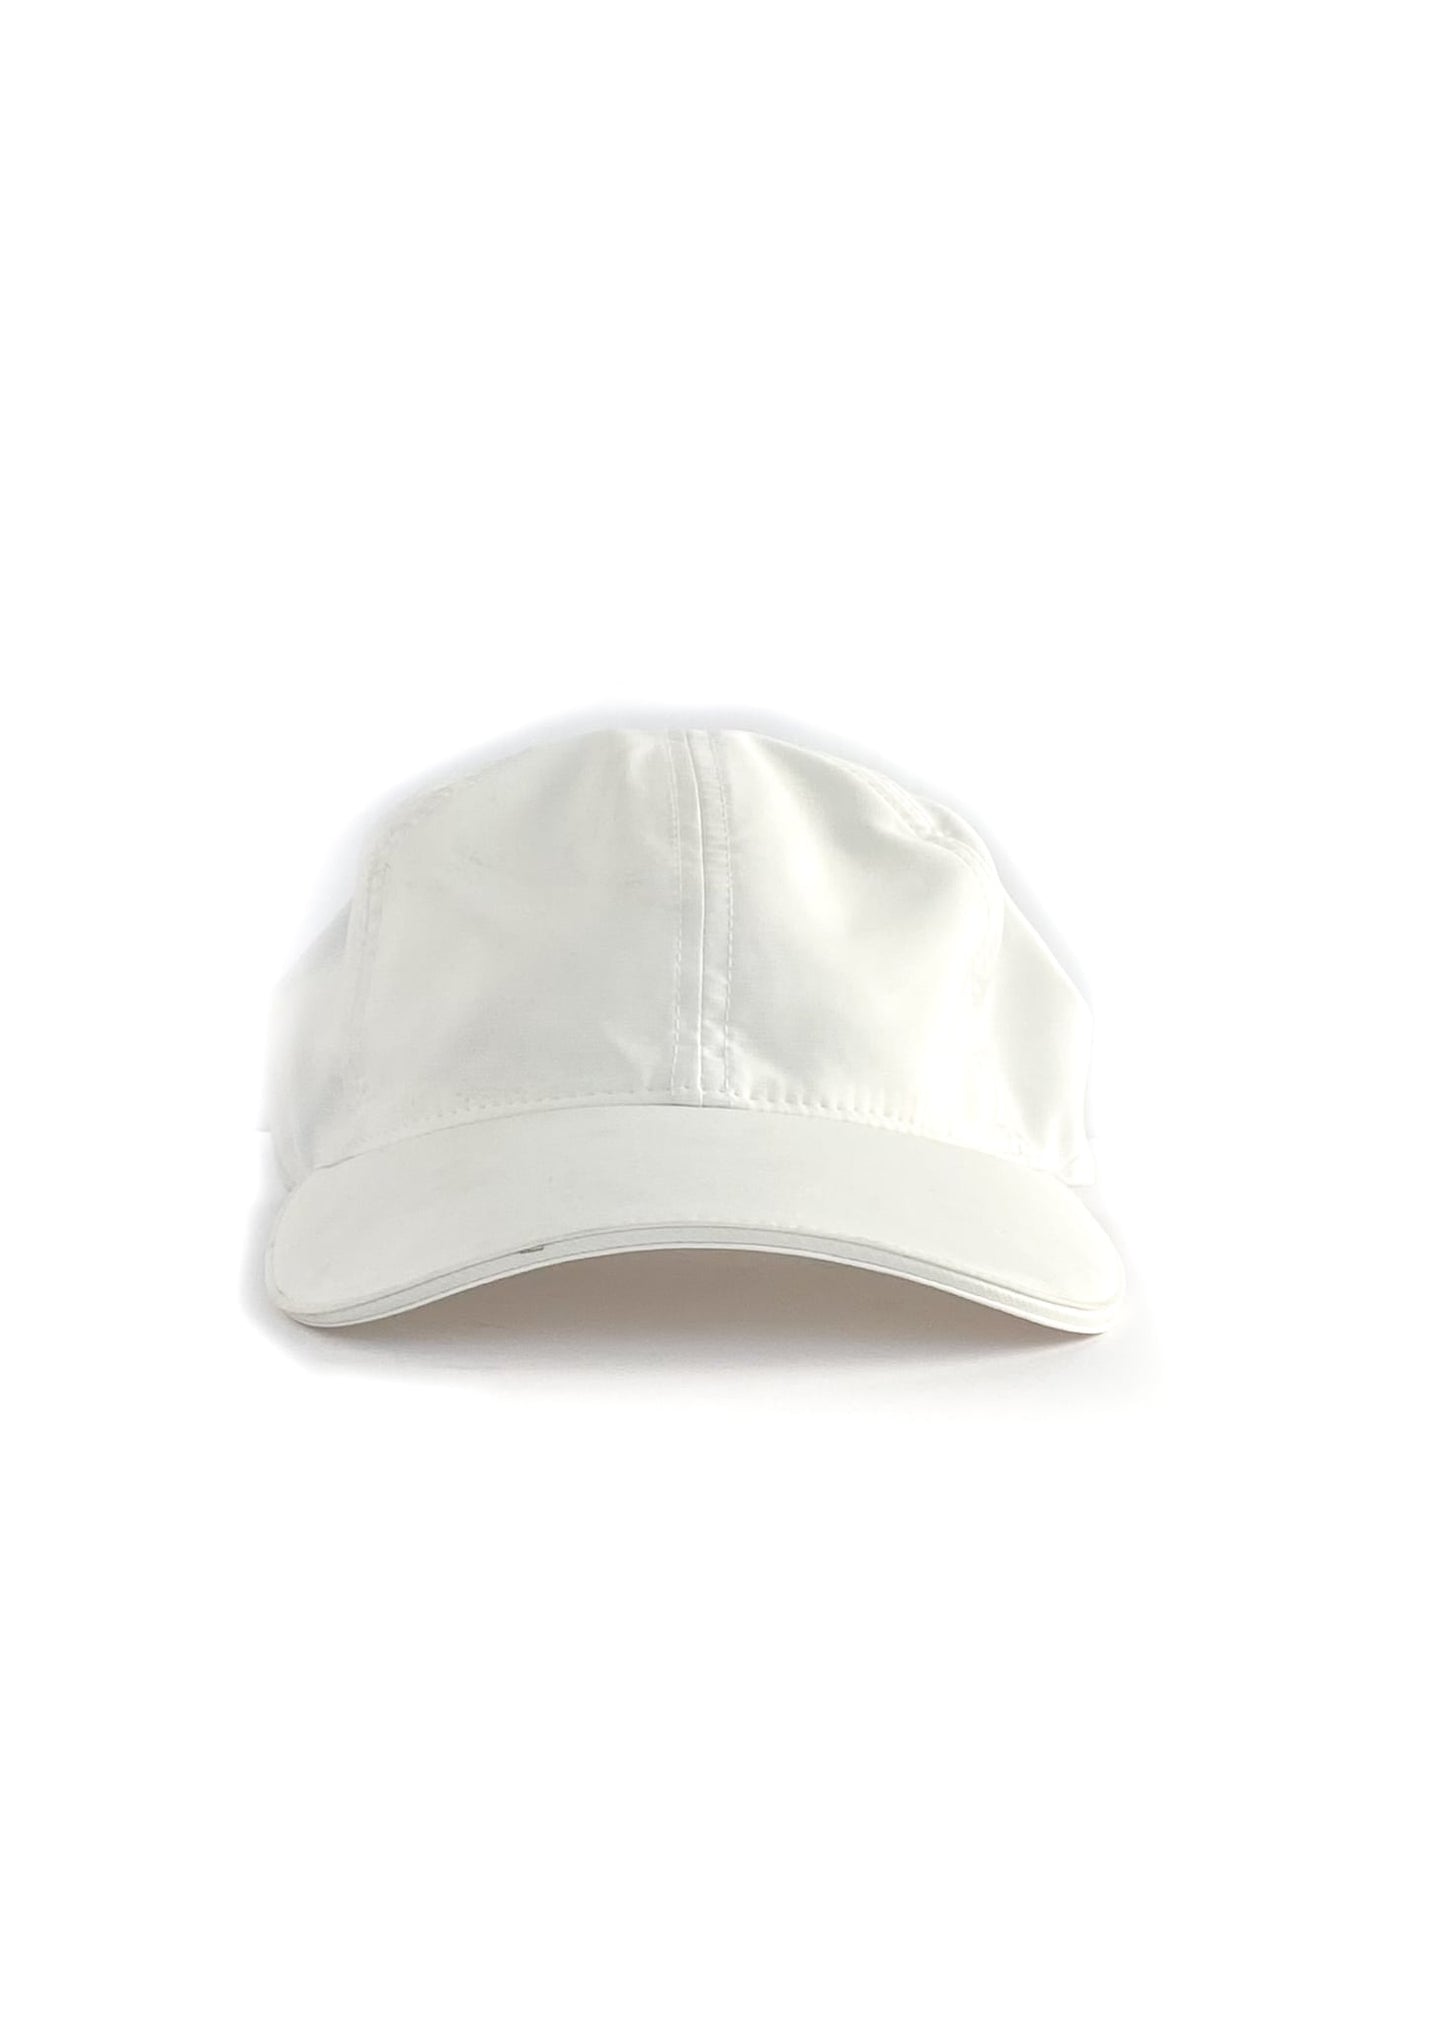 Top Knot Hat - White - Medium/Large